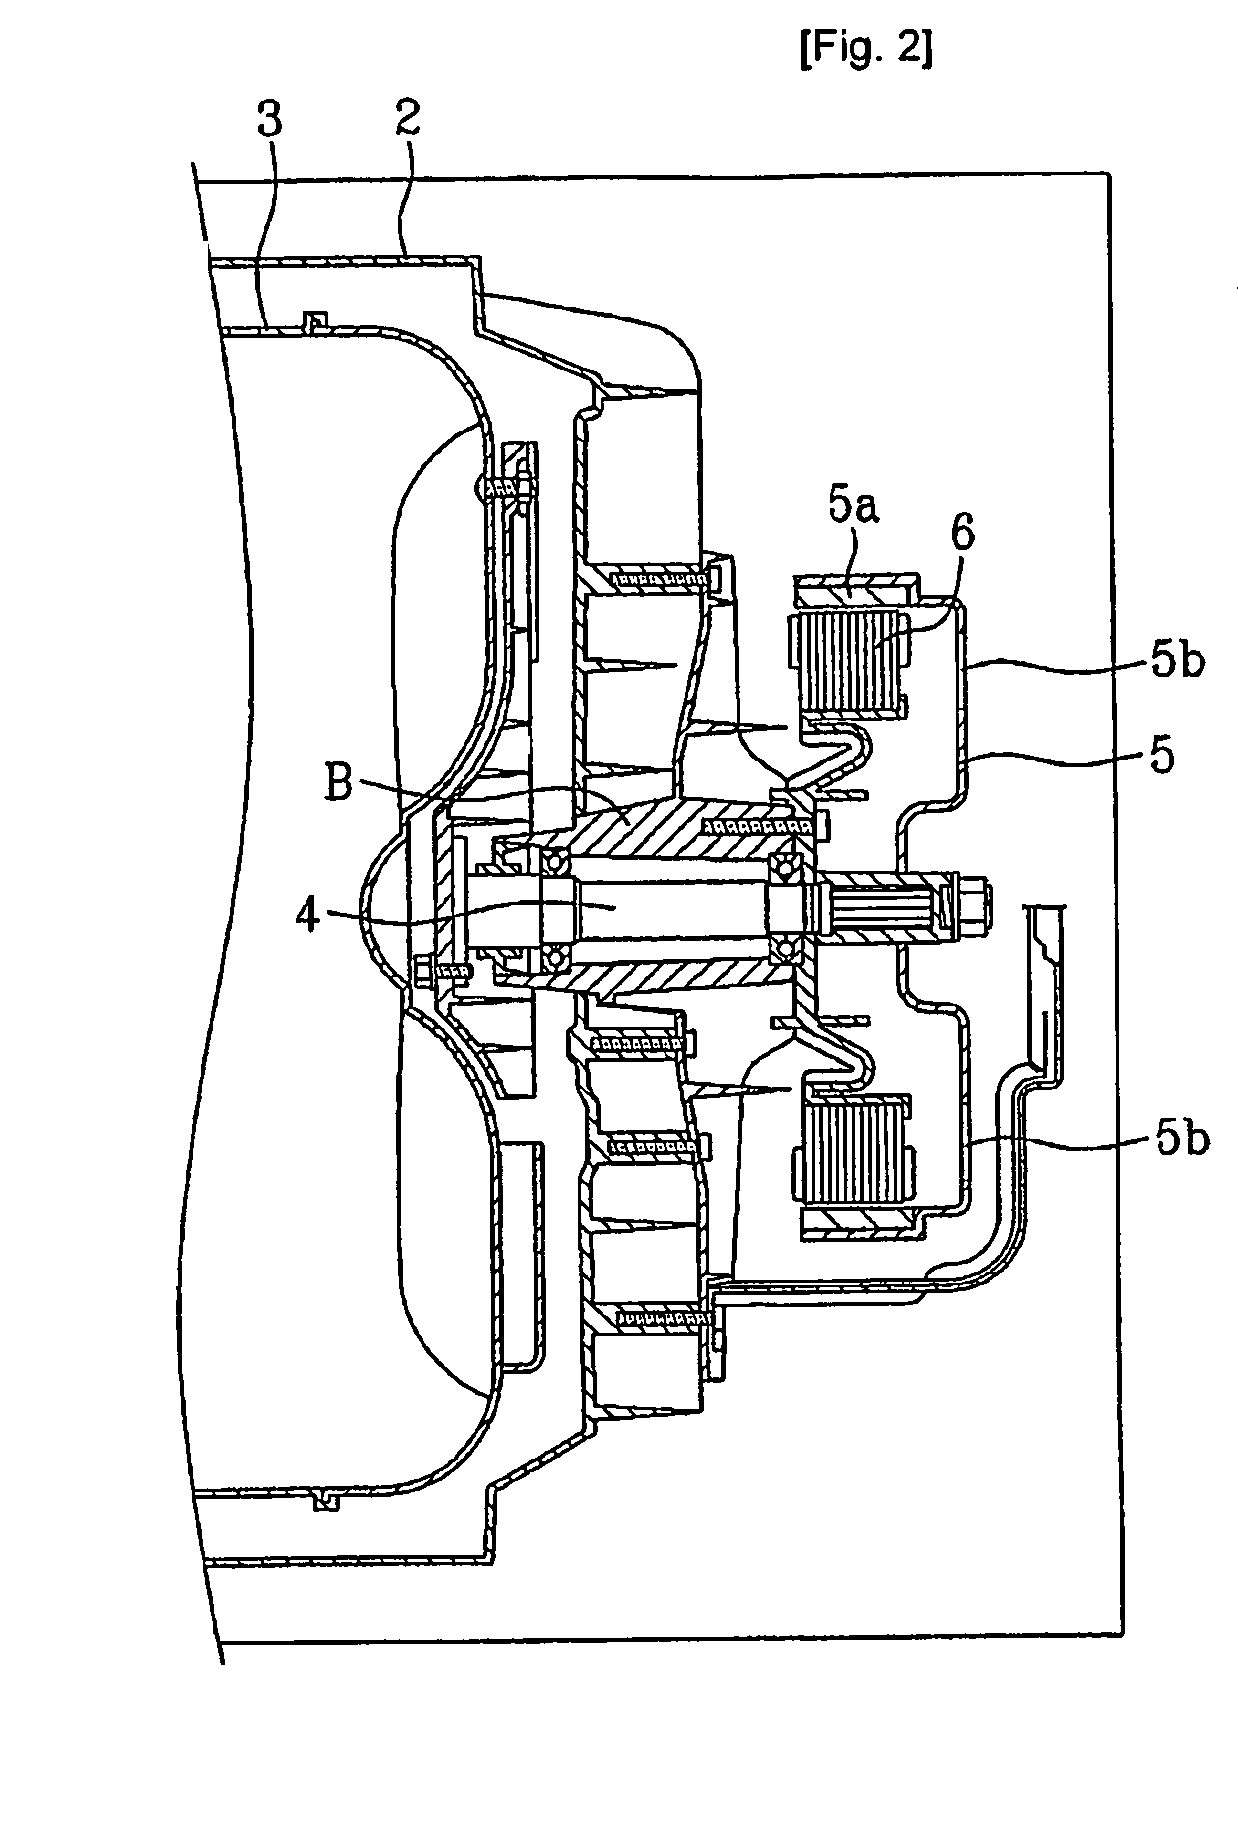 Double rotor type motor